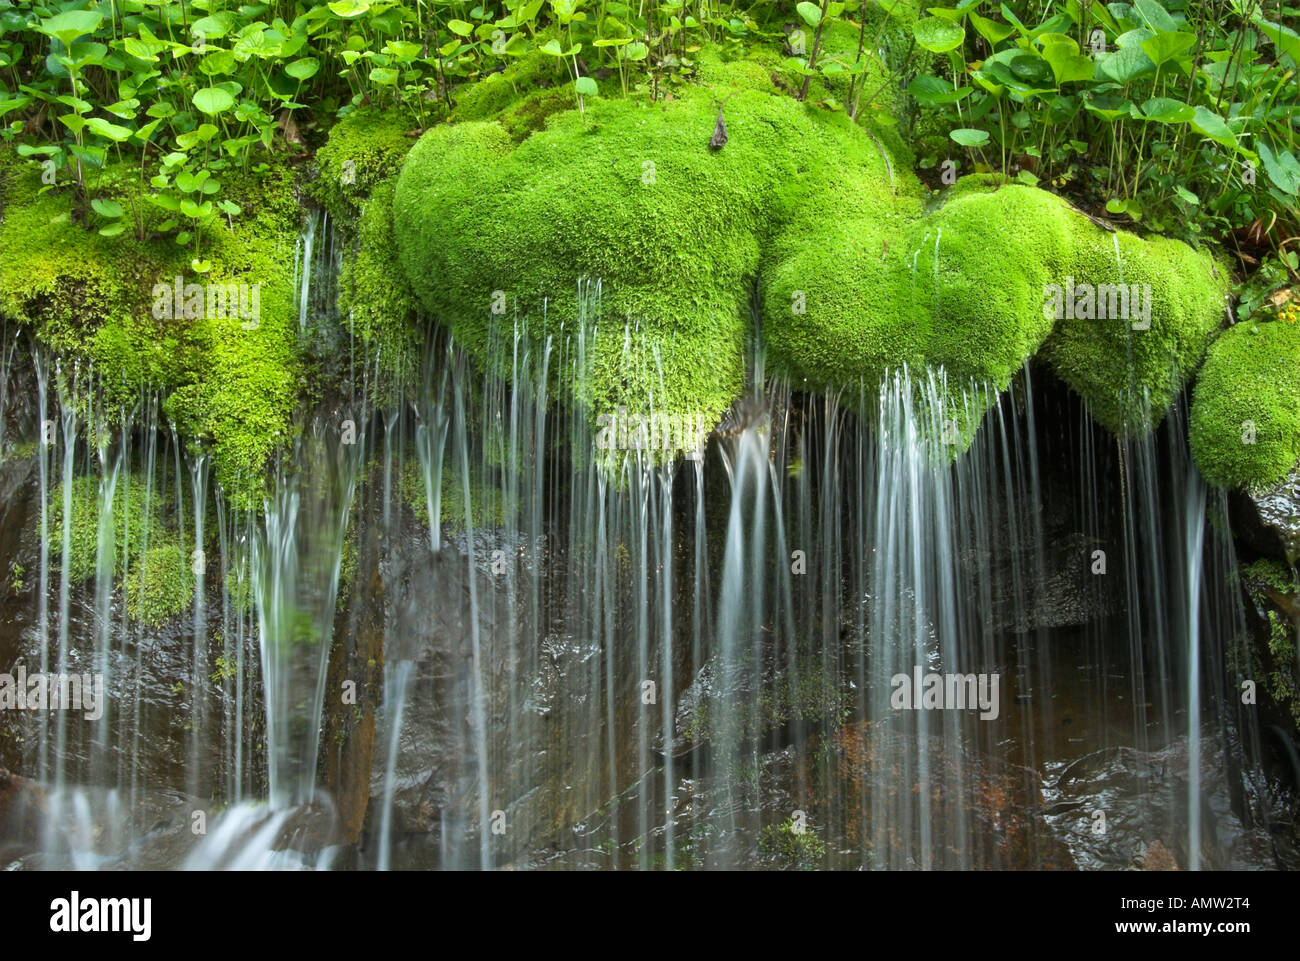 Image result for shenandoah national park waterfalls moss